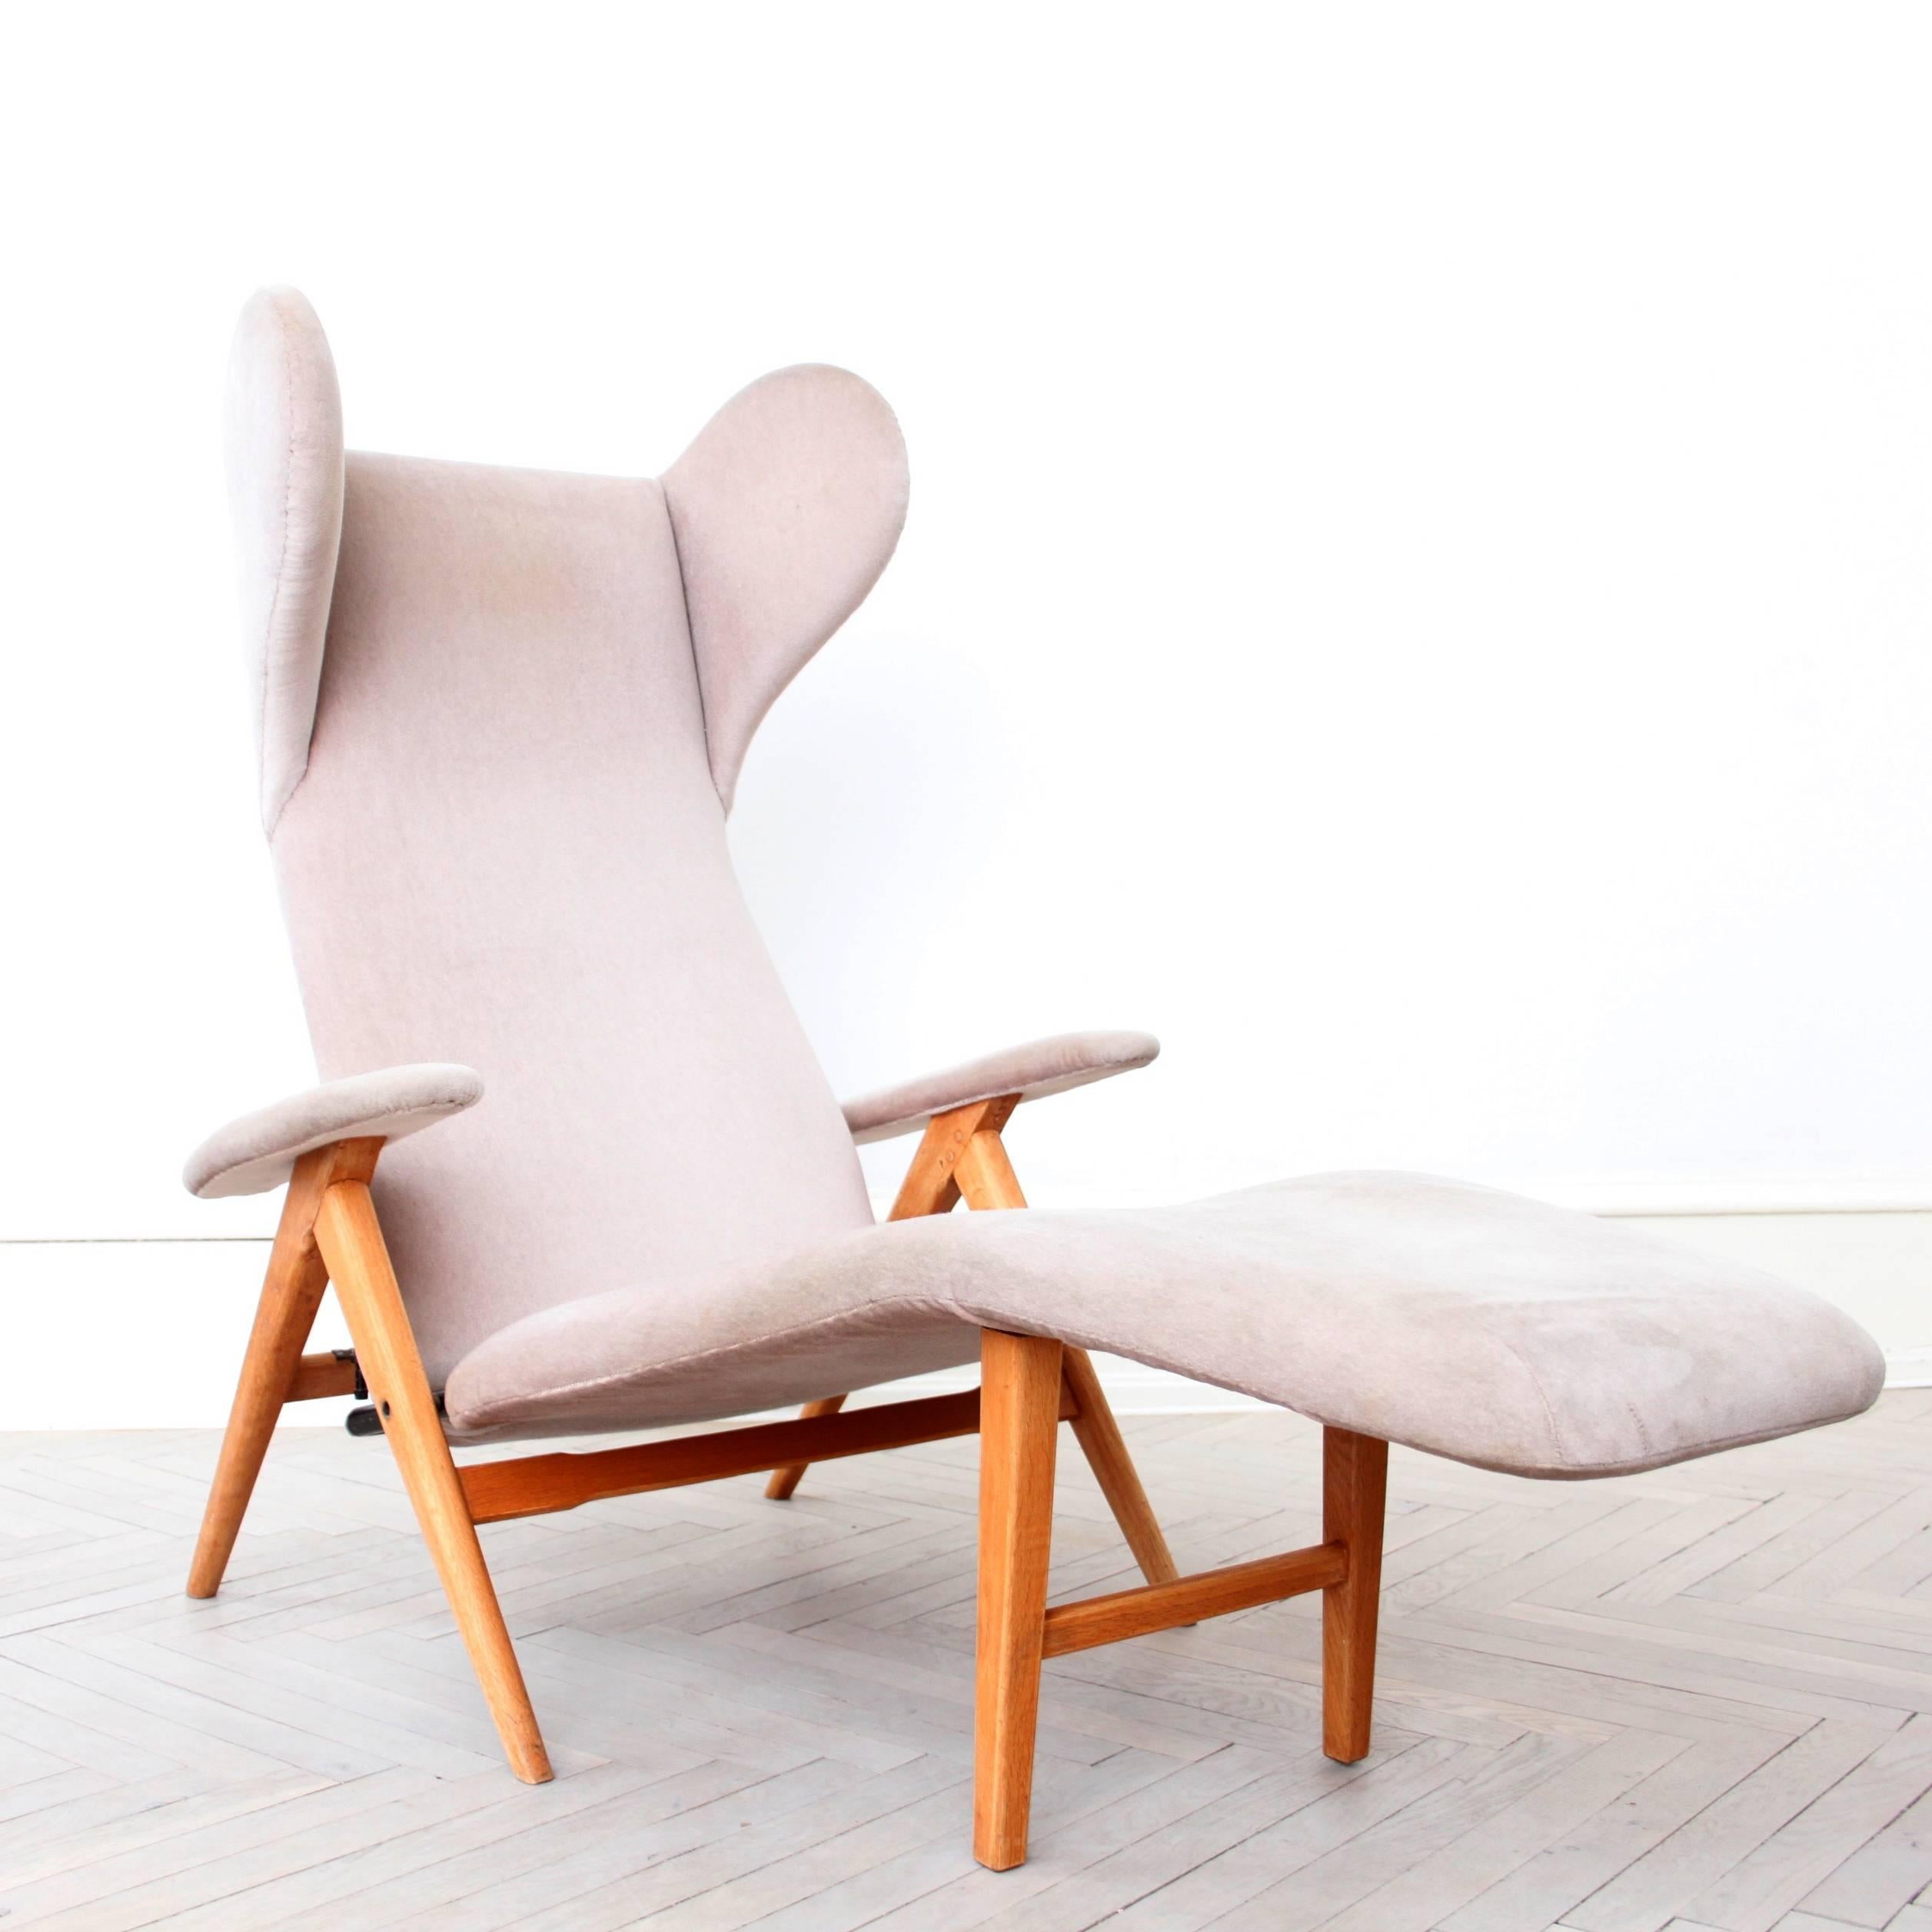 Original H.W. Klein Chaise Longue Chair in Teak and Fabric (Dänisch)